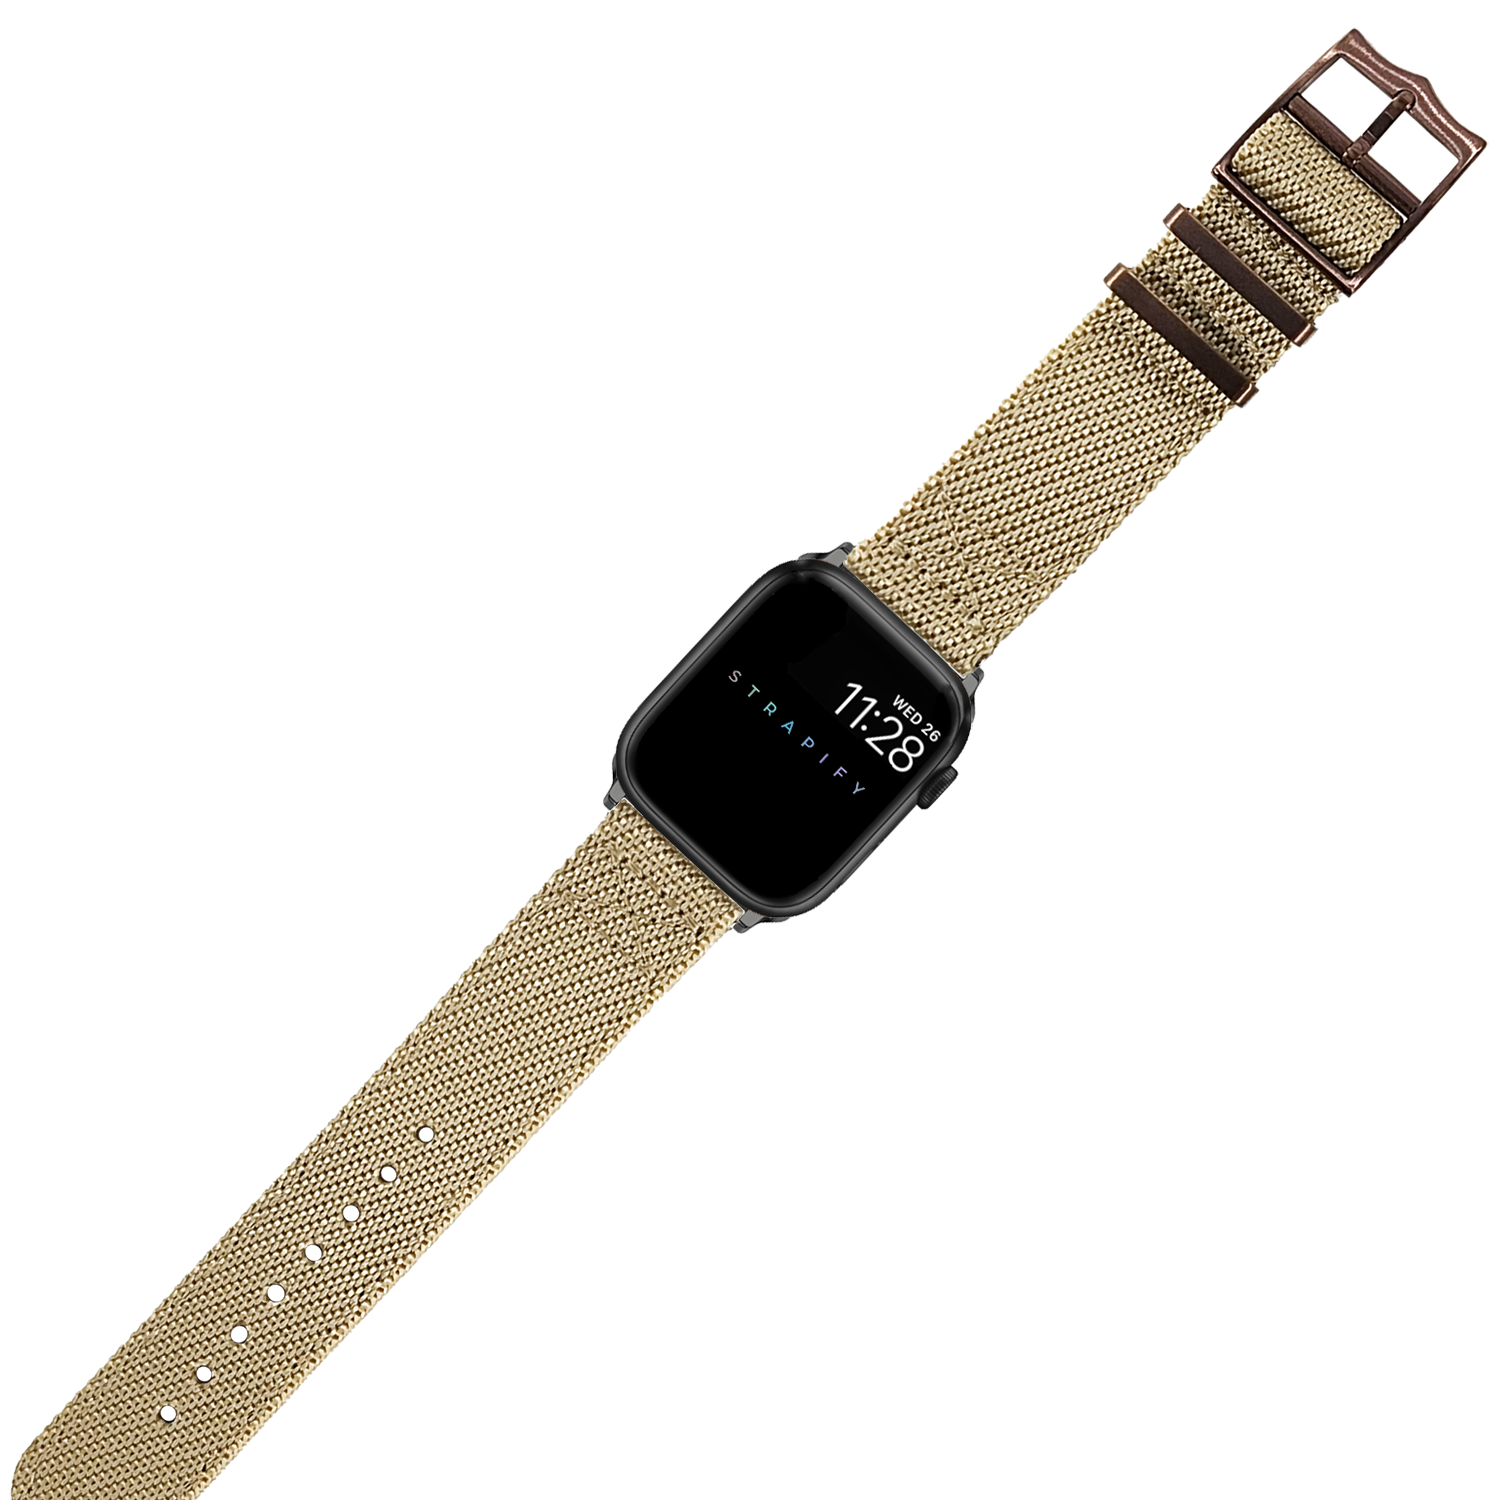 [Apple Watch] Cross Militex - Wheat [Bronze Coloured Hardware]